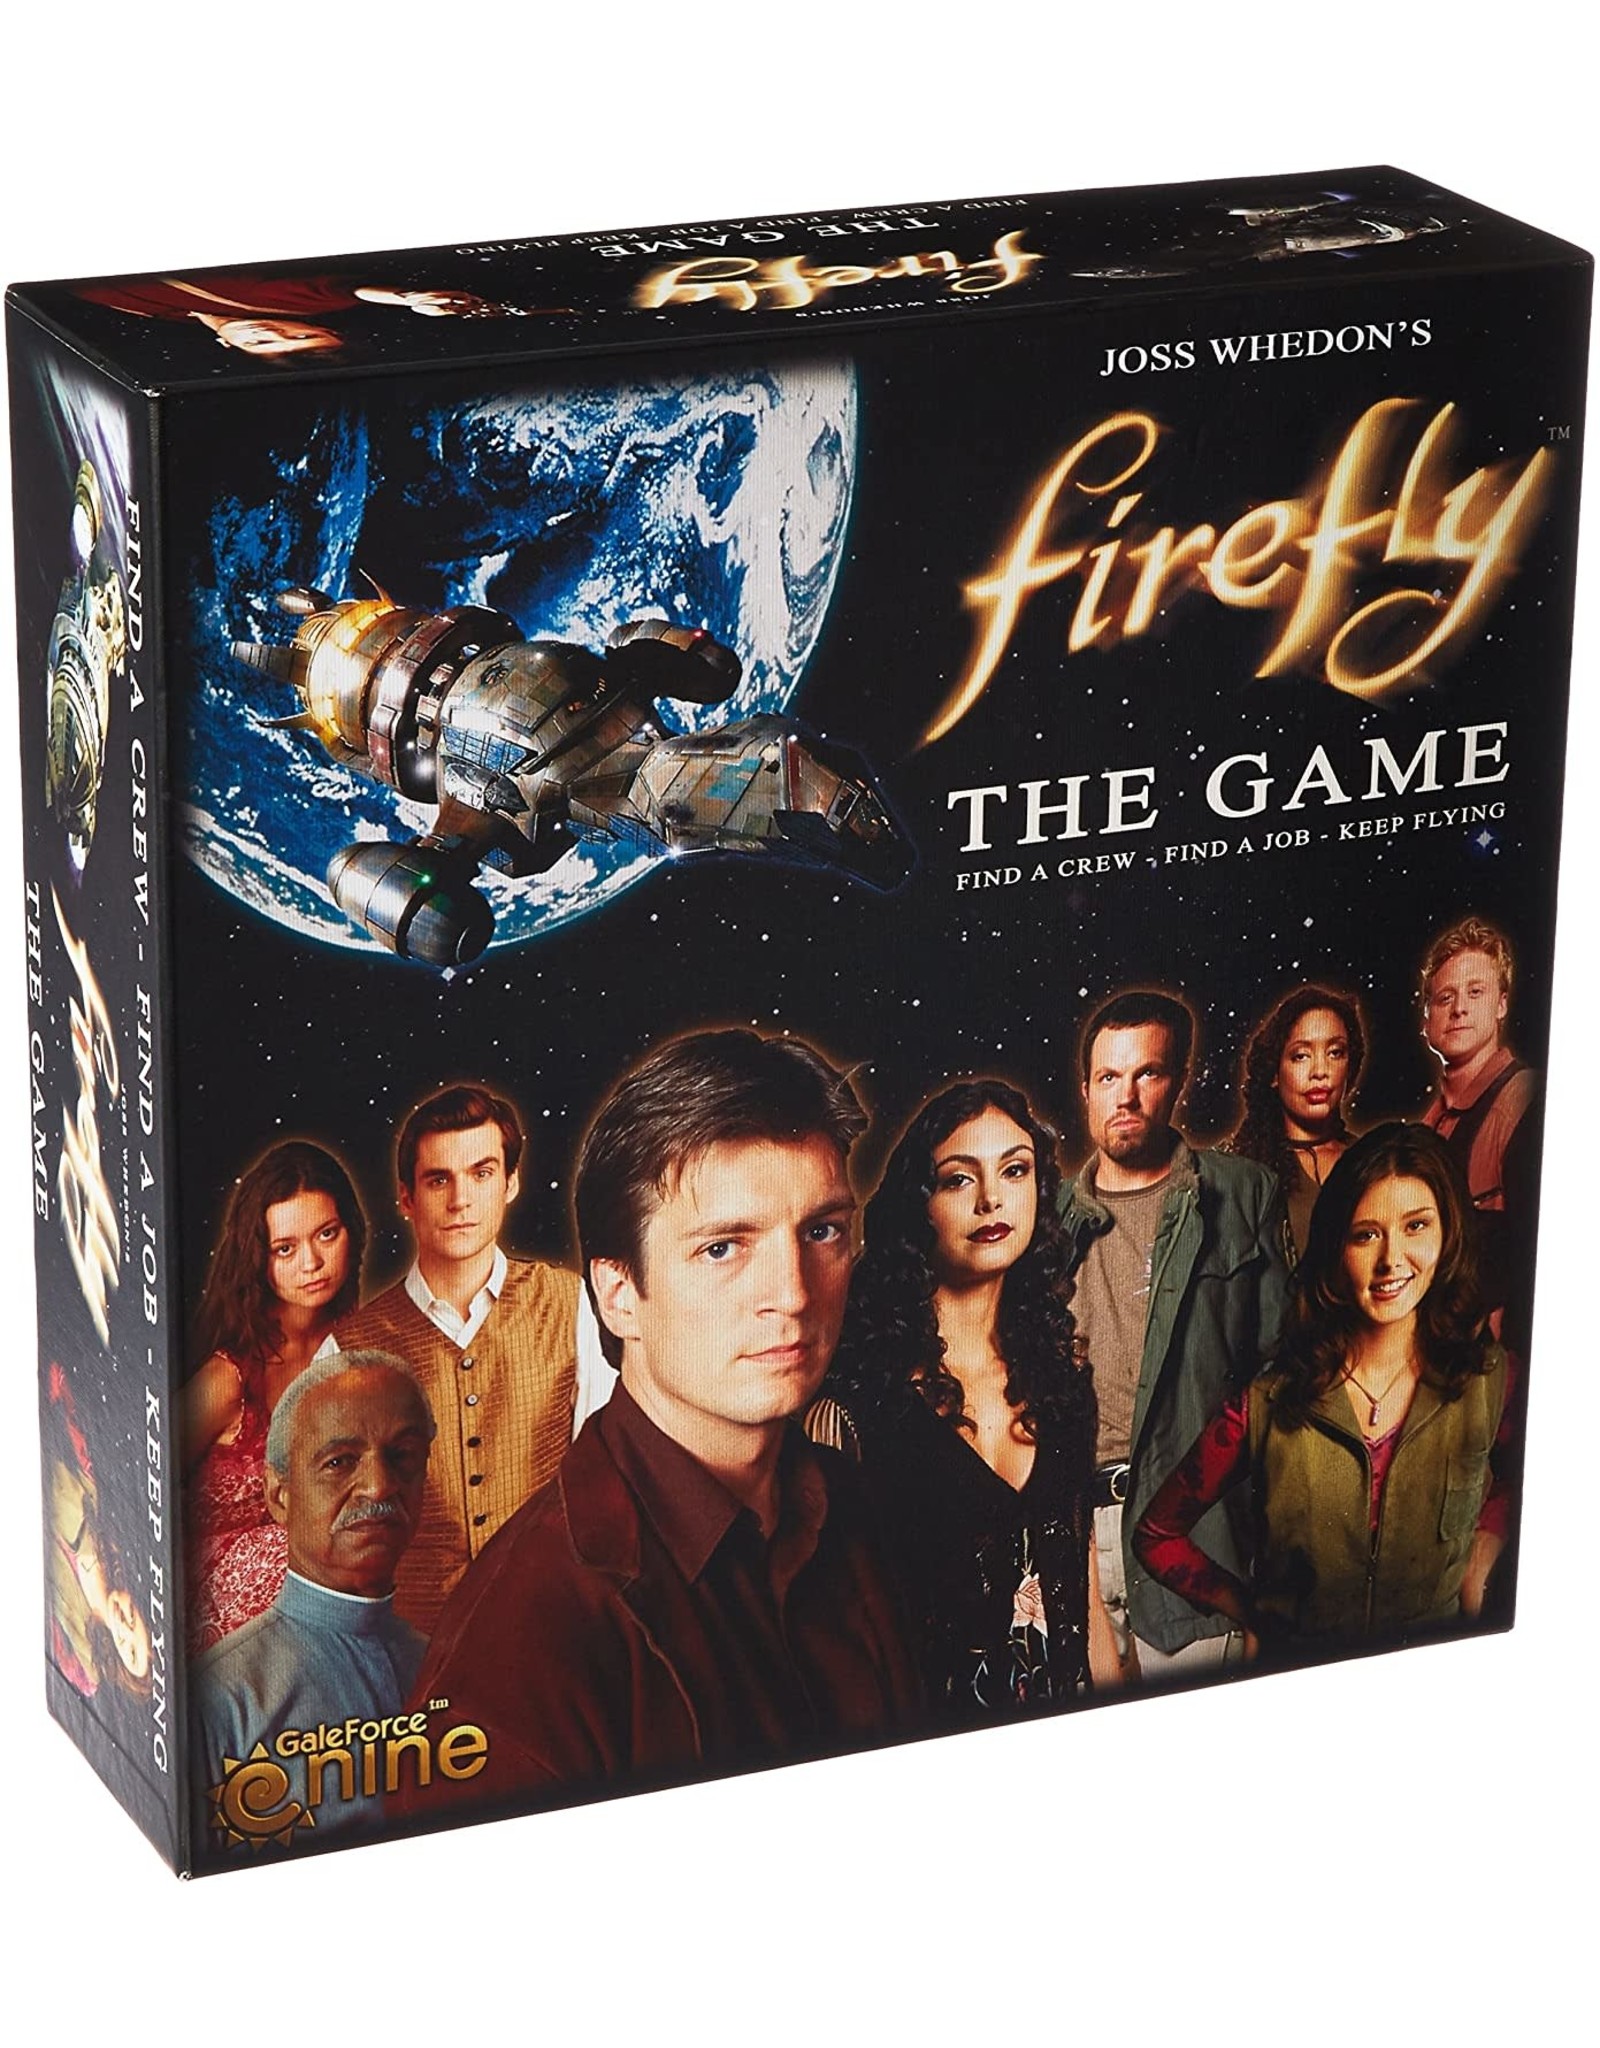 GaleForce nine Firefly: The Board Game